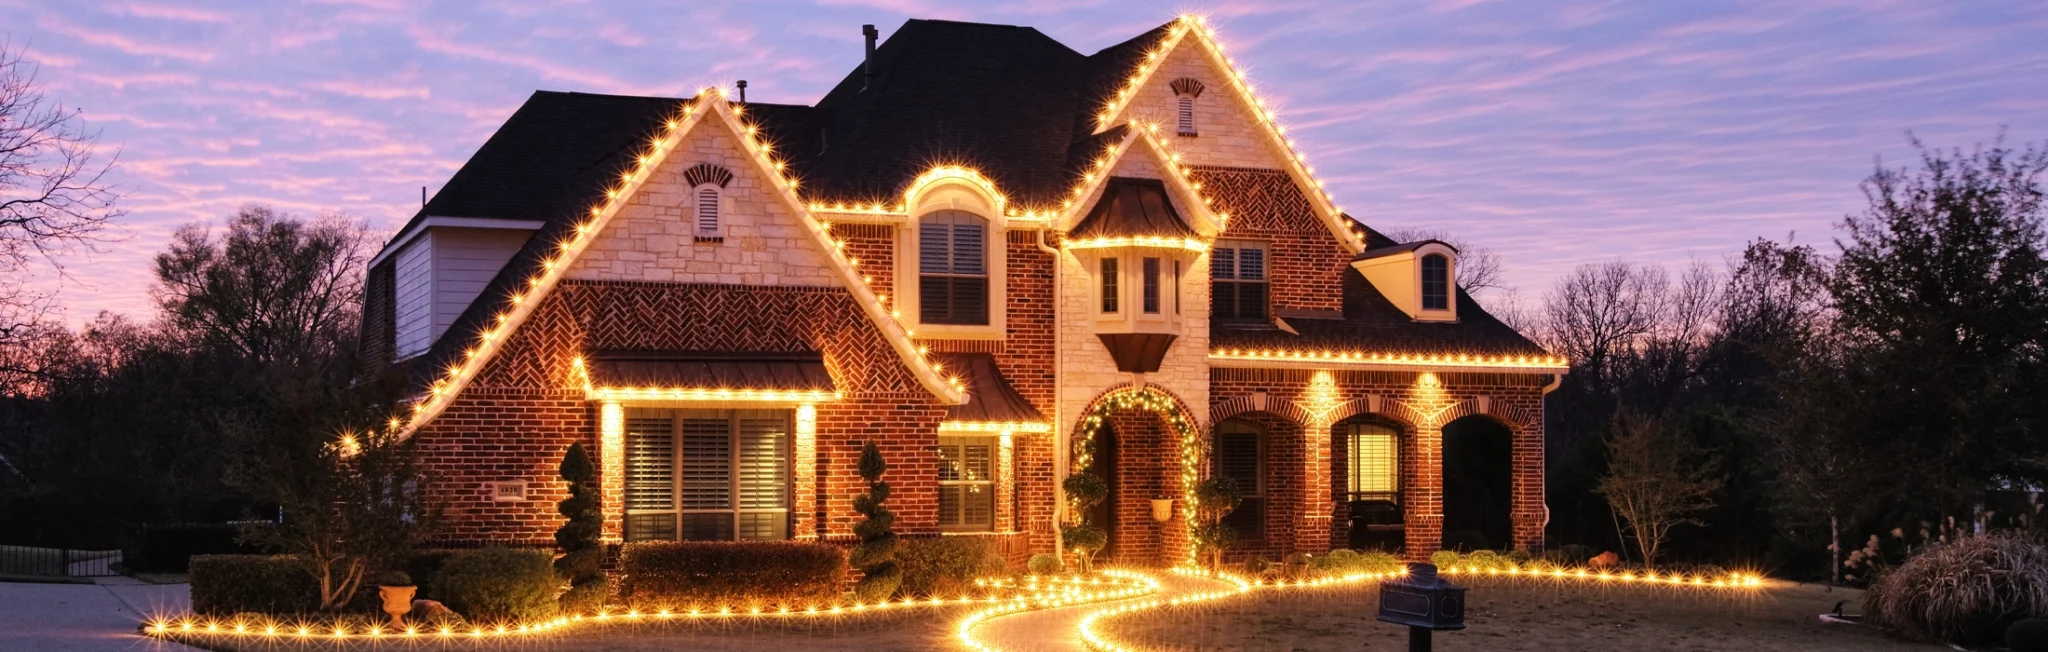 51207-home-decorated-with-christmas-lights-2022-03-04-02-36-01-utc